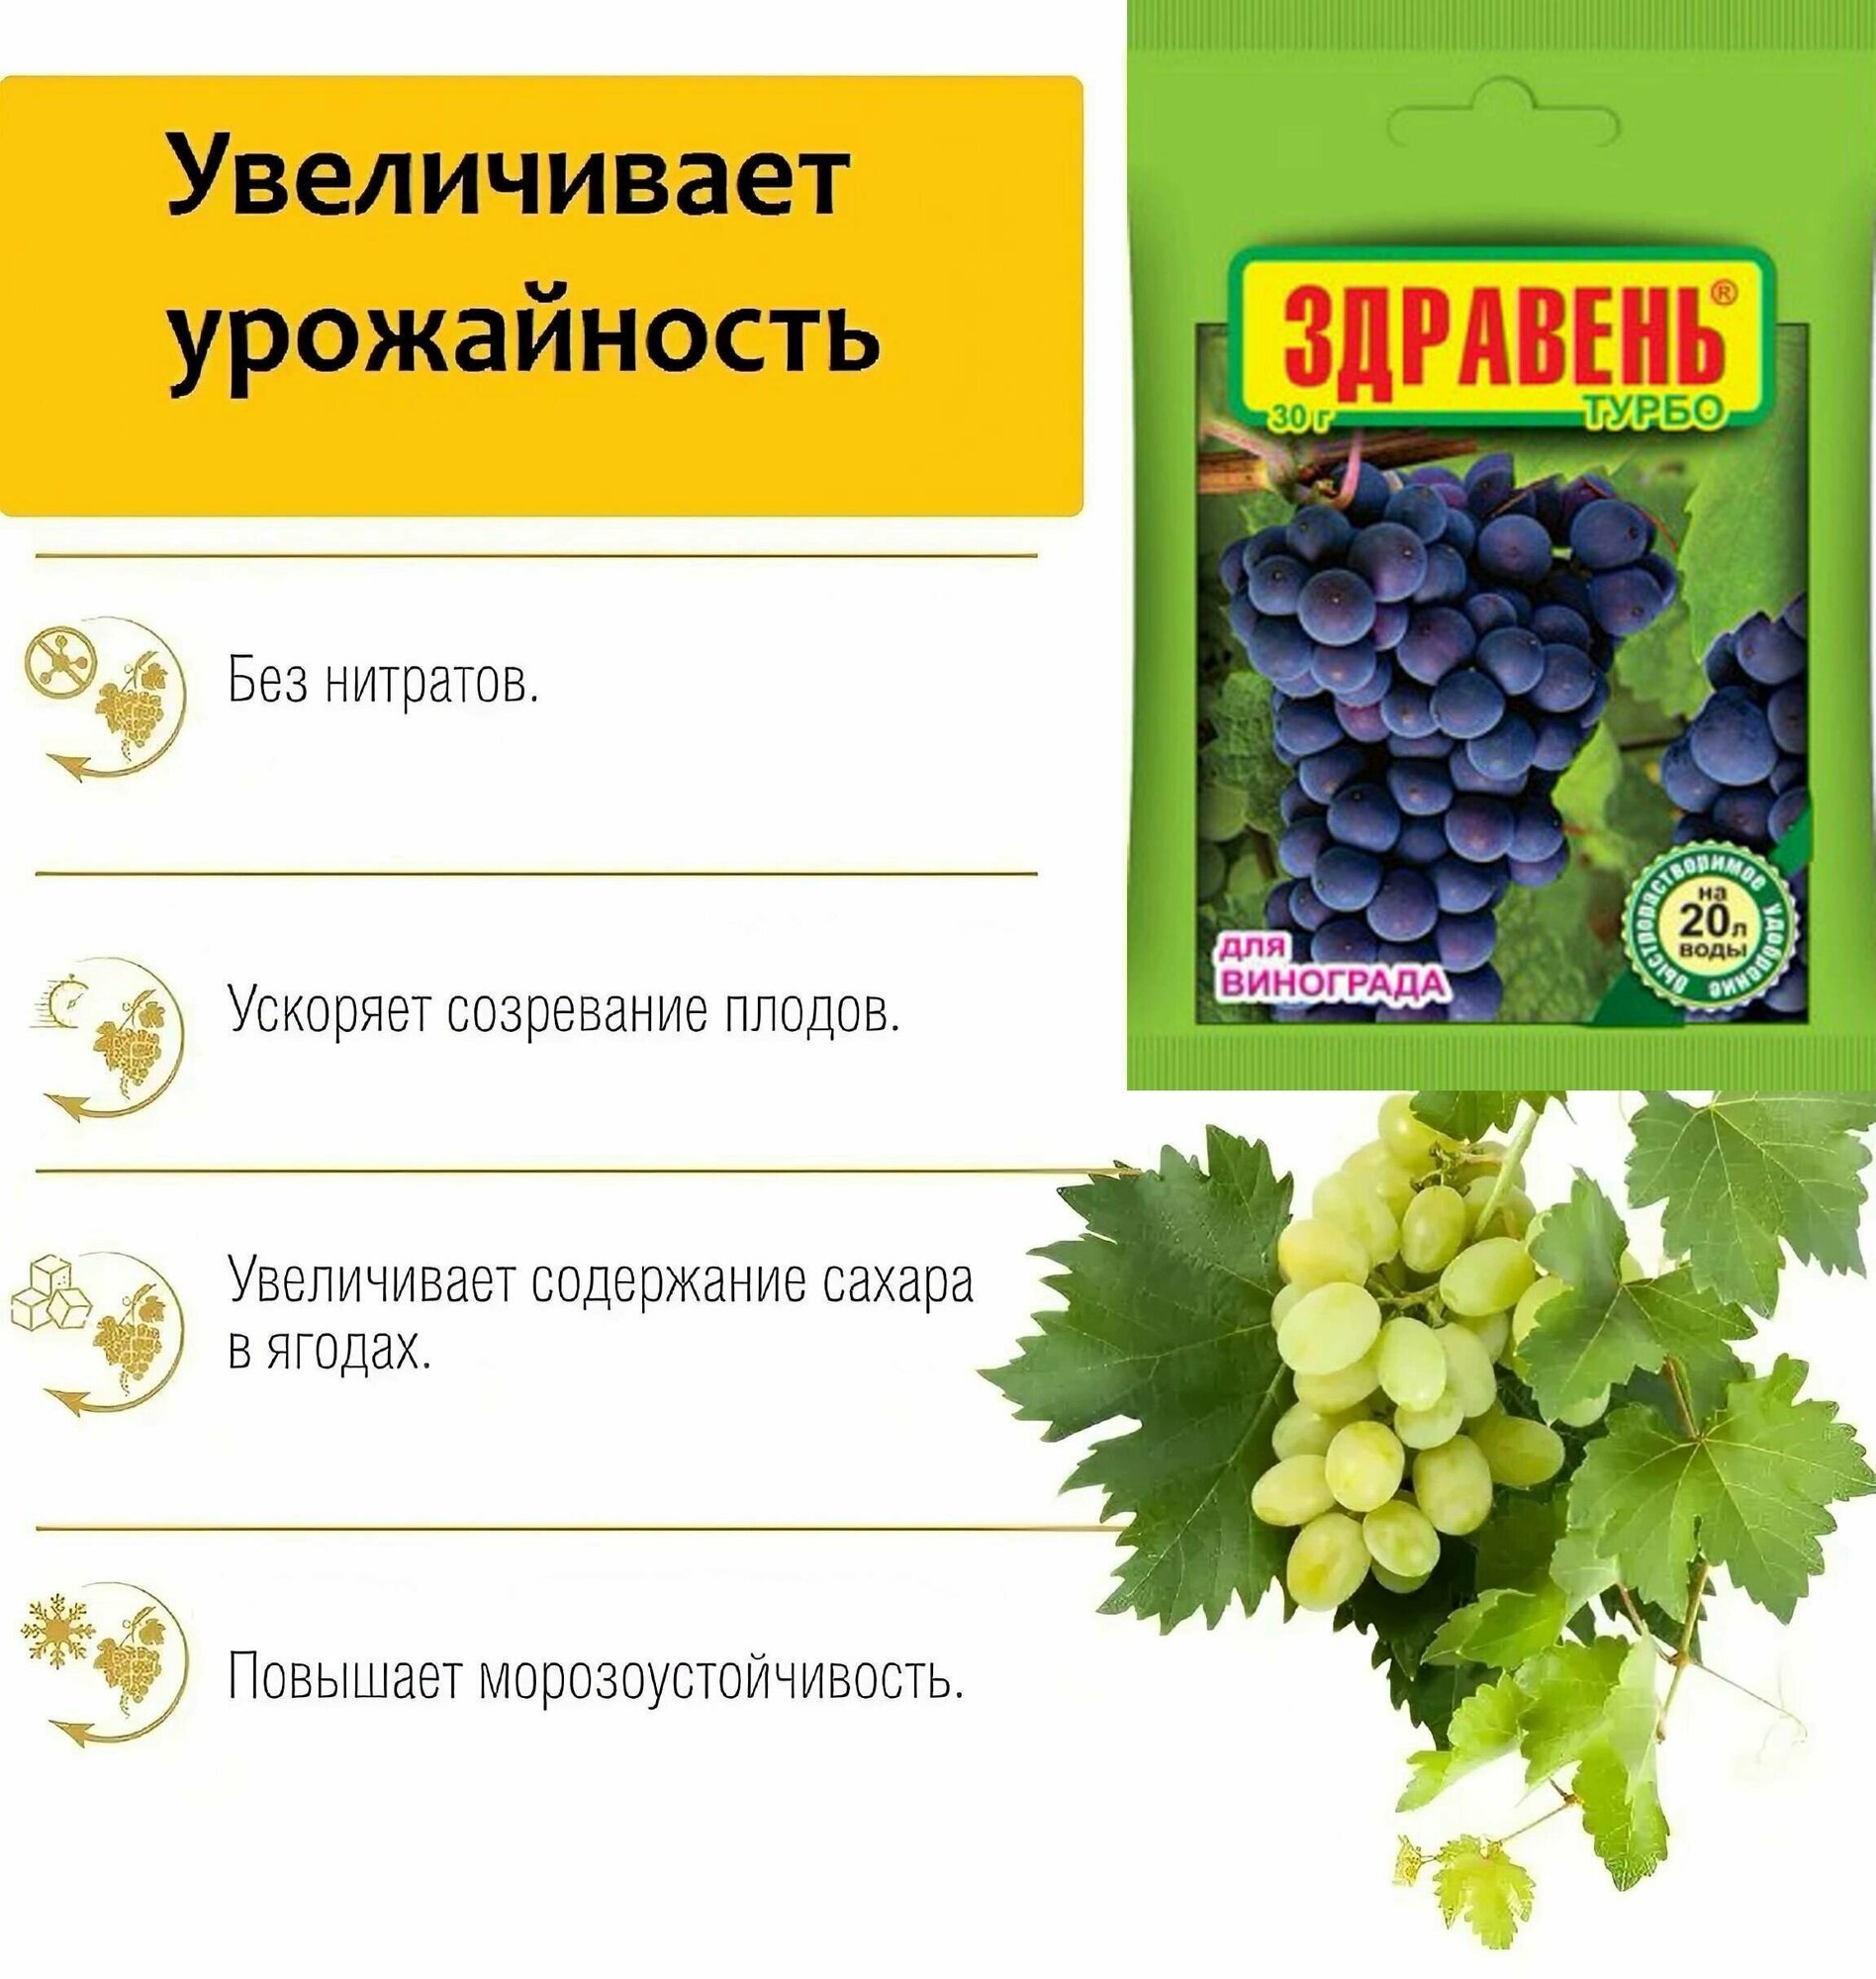 Здравень для Винограда, 30 грамм, Ваше хозяйство - 3 пачки - фотография № 5